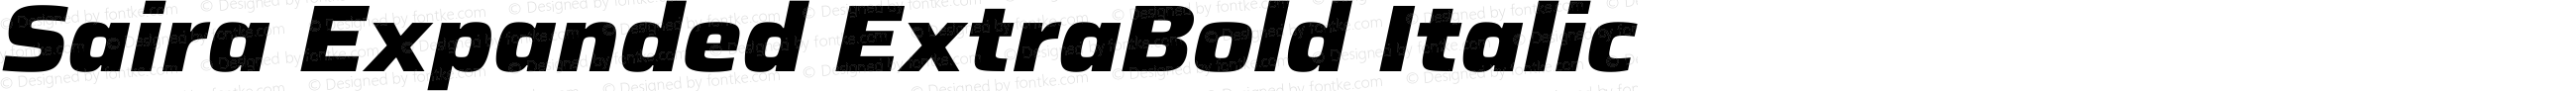 Saira Expanded ExtraBold Italic